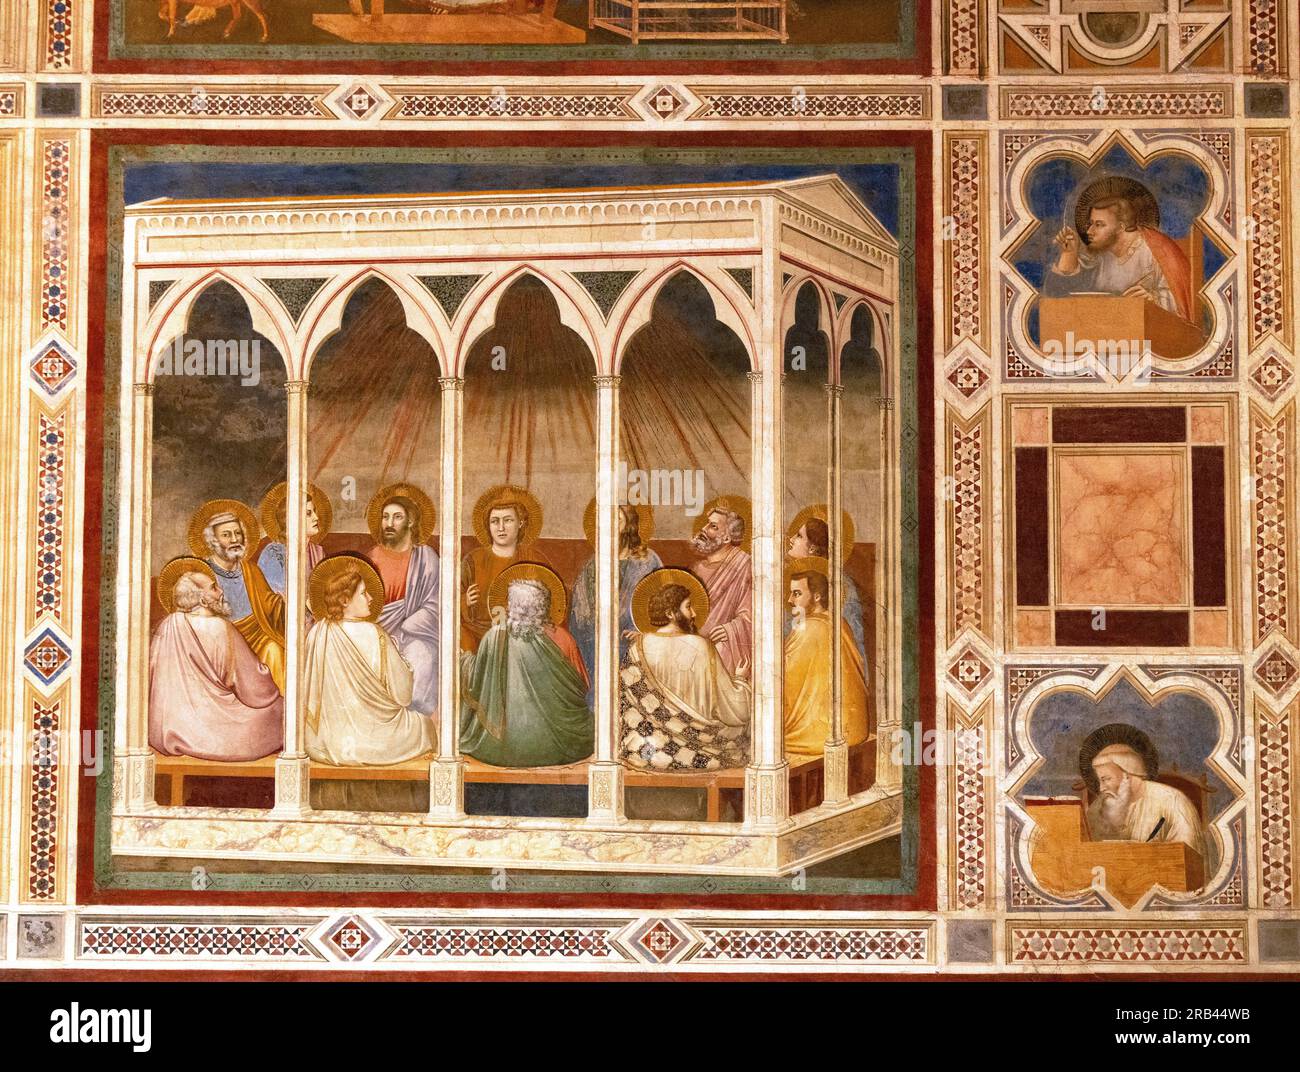 Giotto frescoes, the Scrovegni Chapel, Padua - 14th century Italian Renaissance paintings of  the Life of Christ; seen here 'Pentecost'; Padua Italy Stock Photo